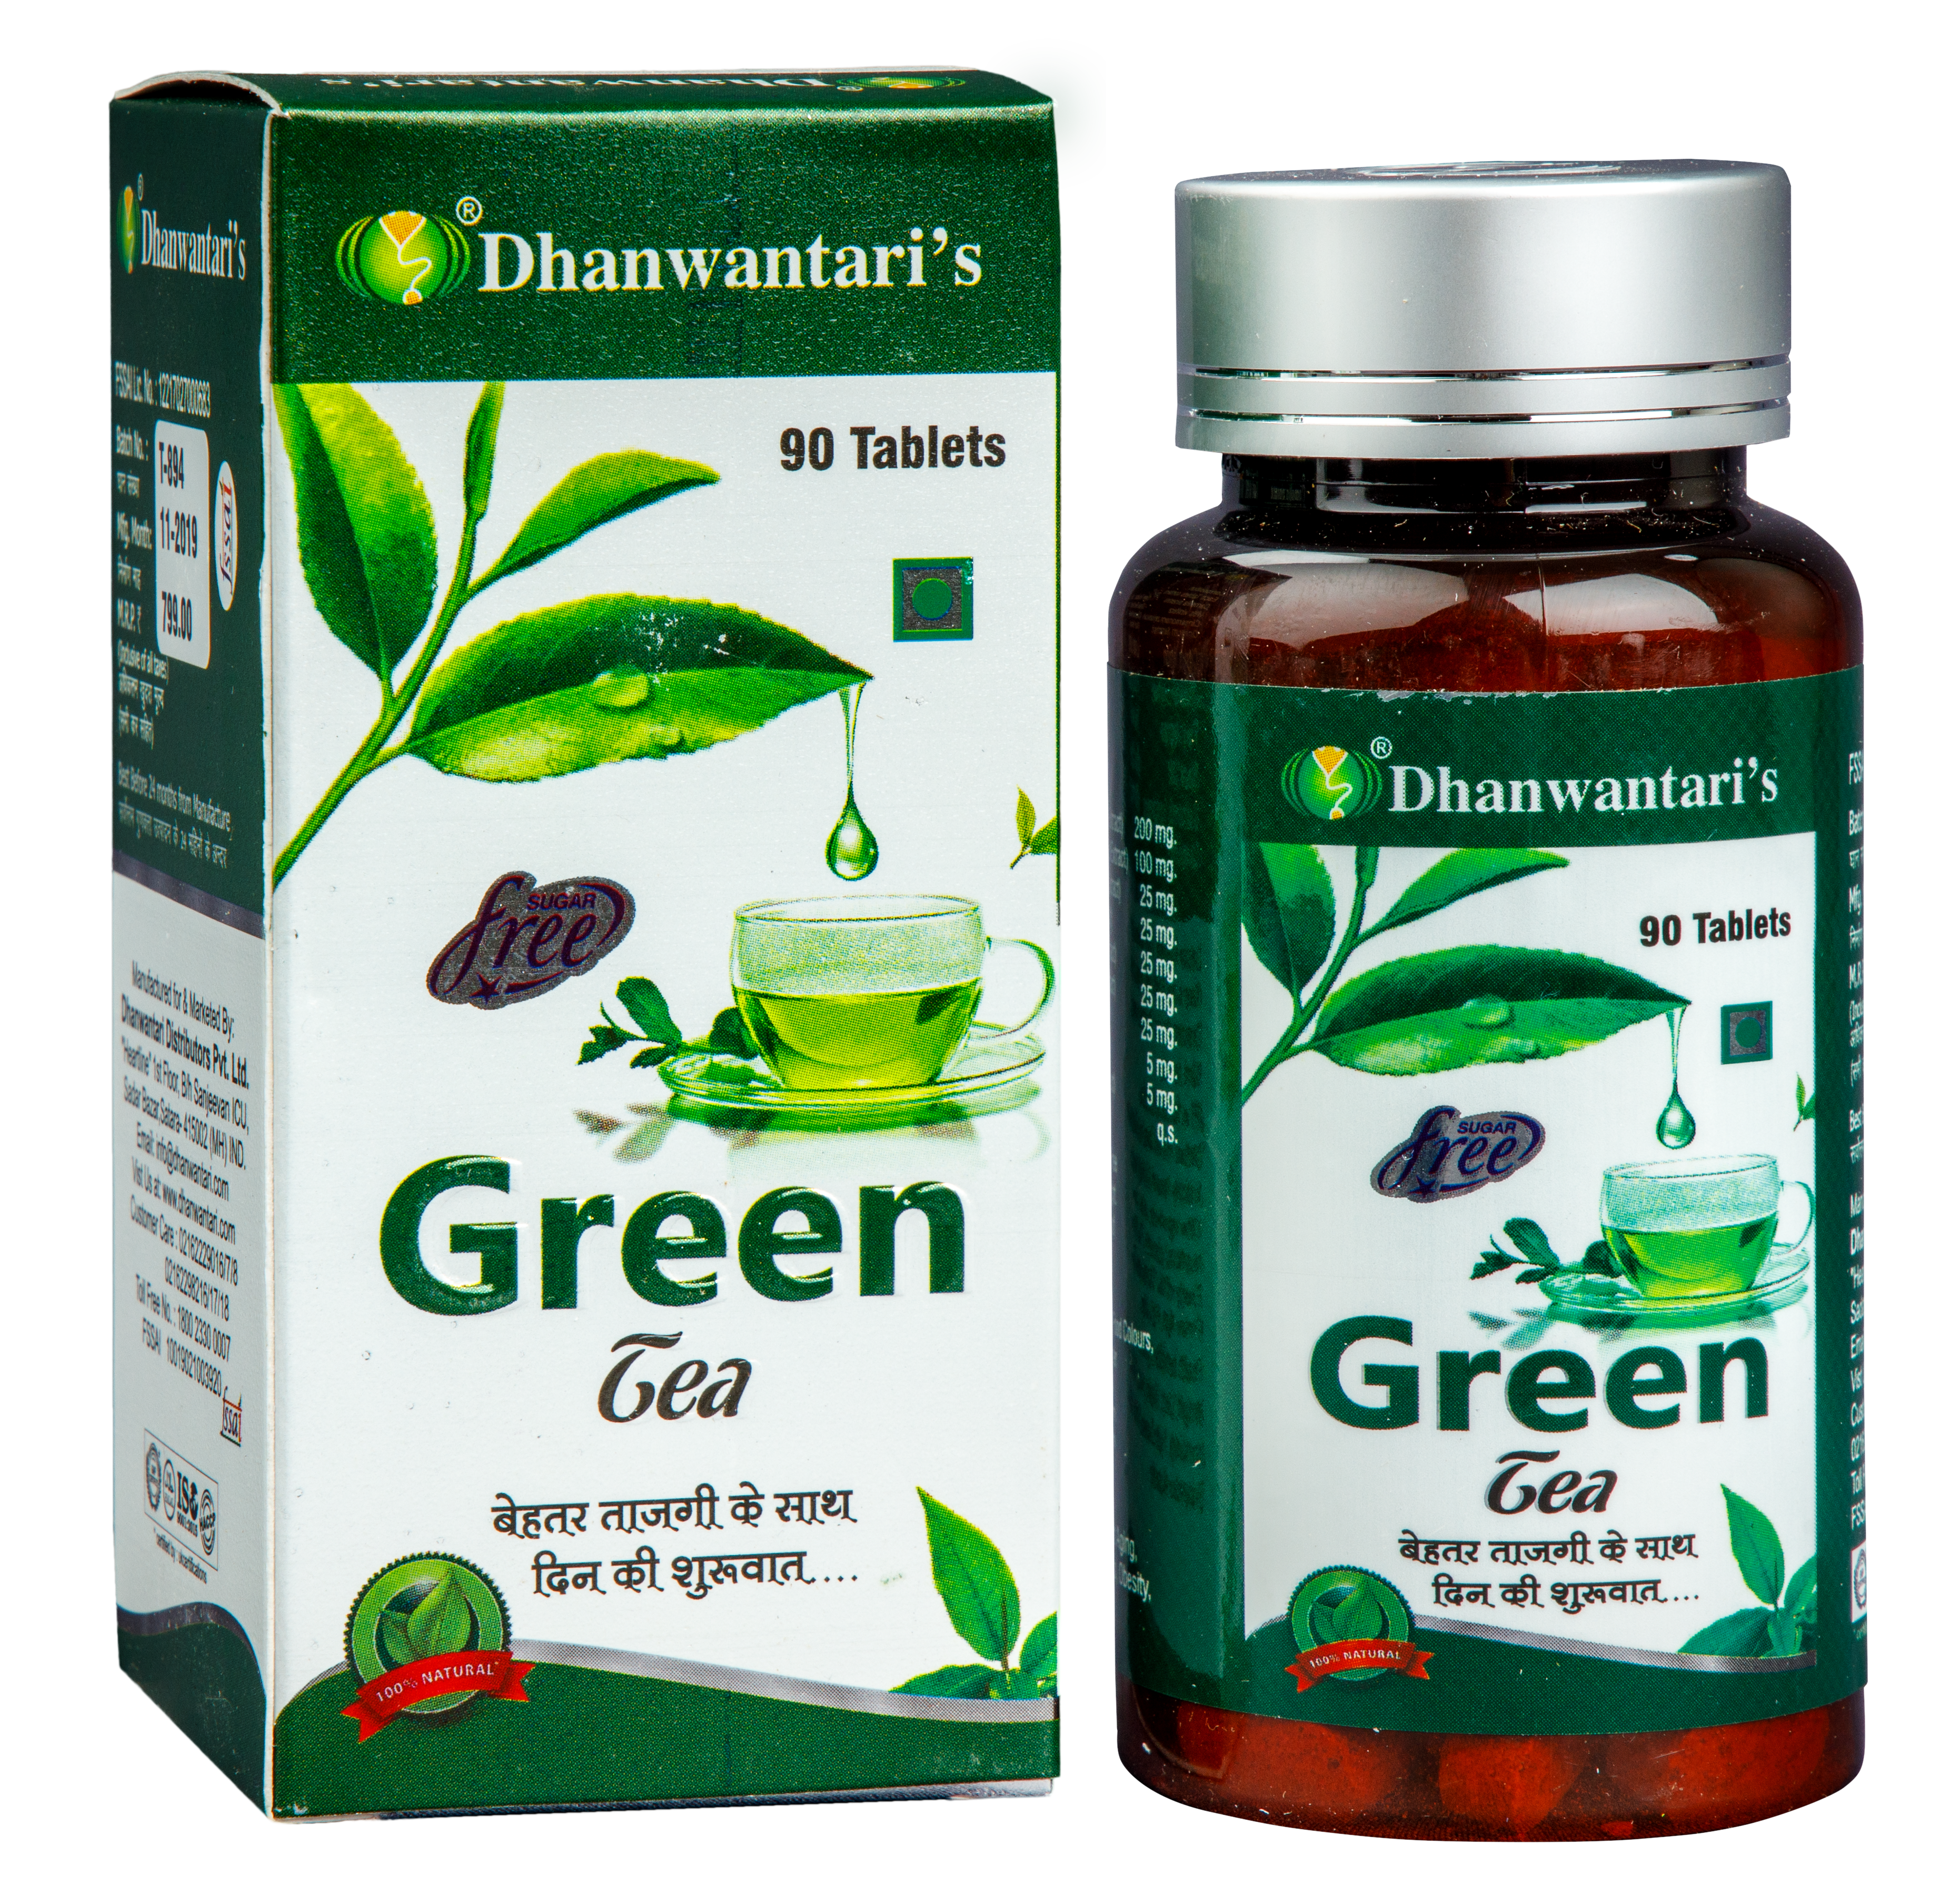 Green Tea Tablets